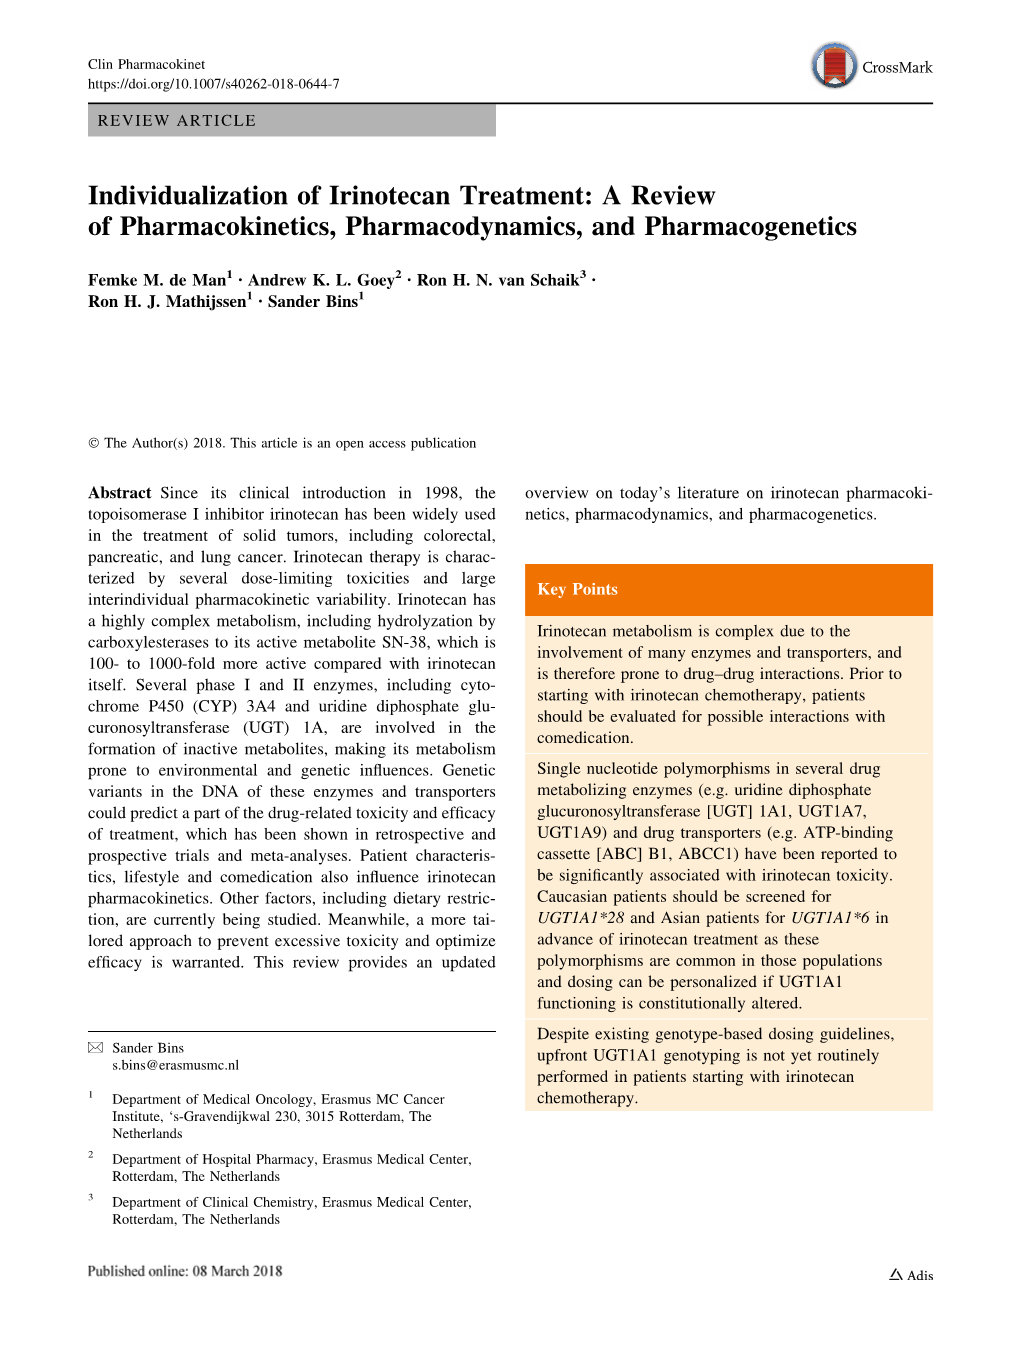 Individualization of Irinotecan Treatment: a Review of Pharmacokinetics, Pharmacodynamics, and Pharmacogenetics